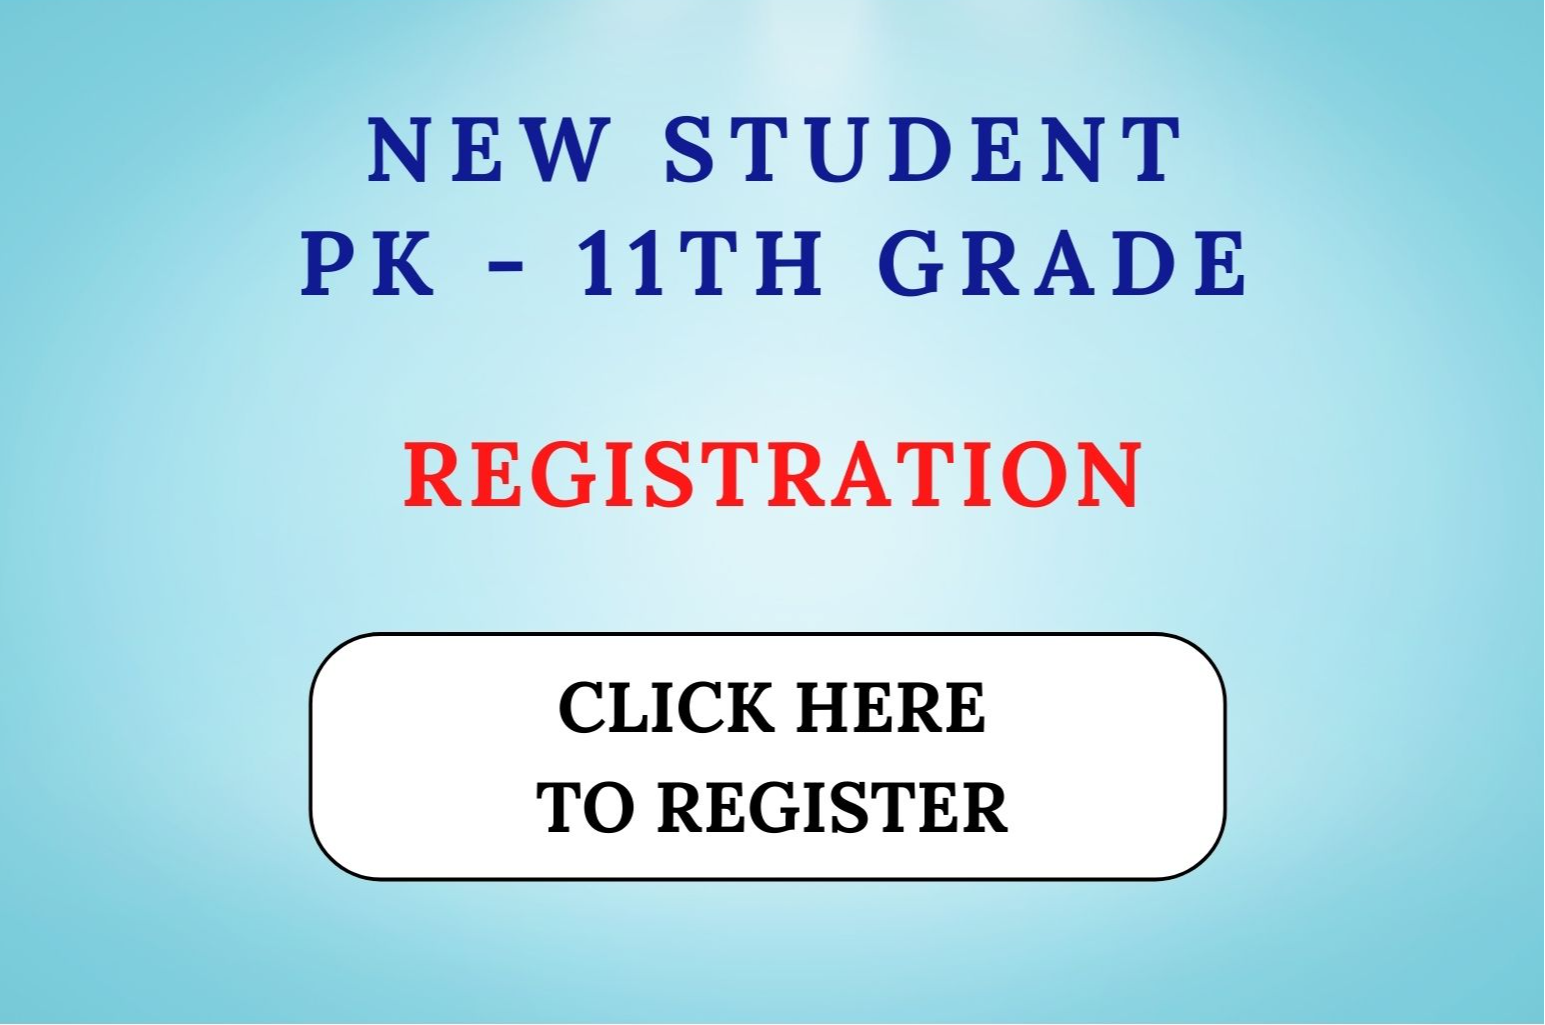 New Student Registration KG-10th